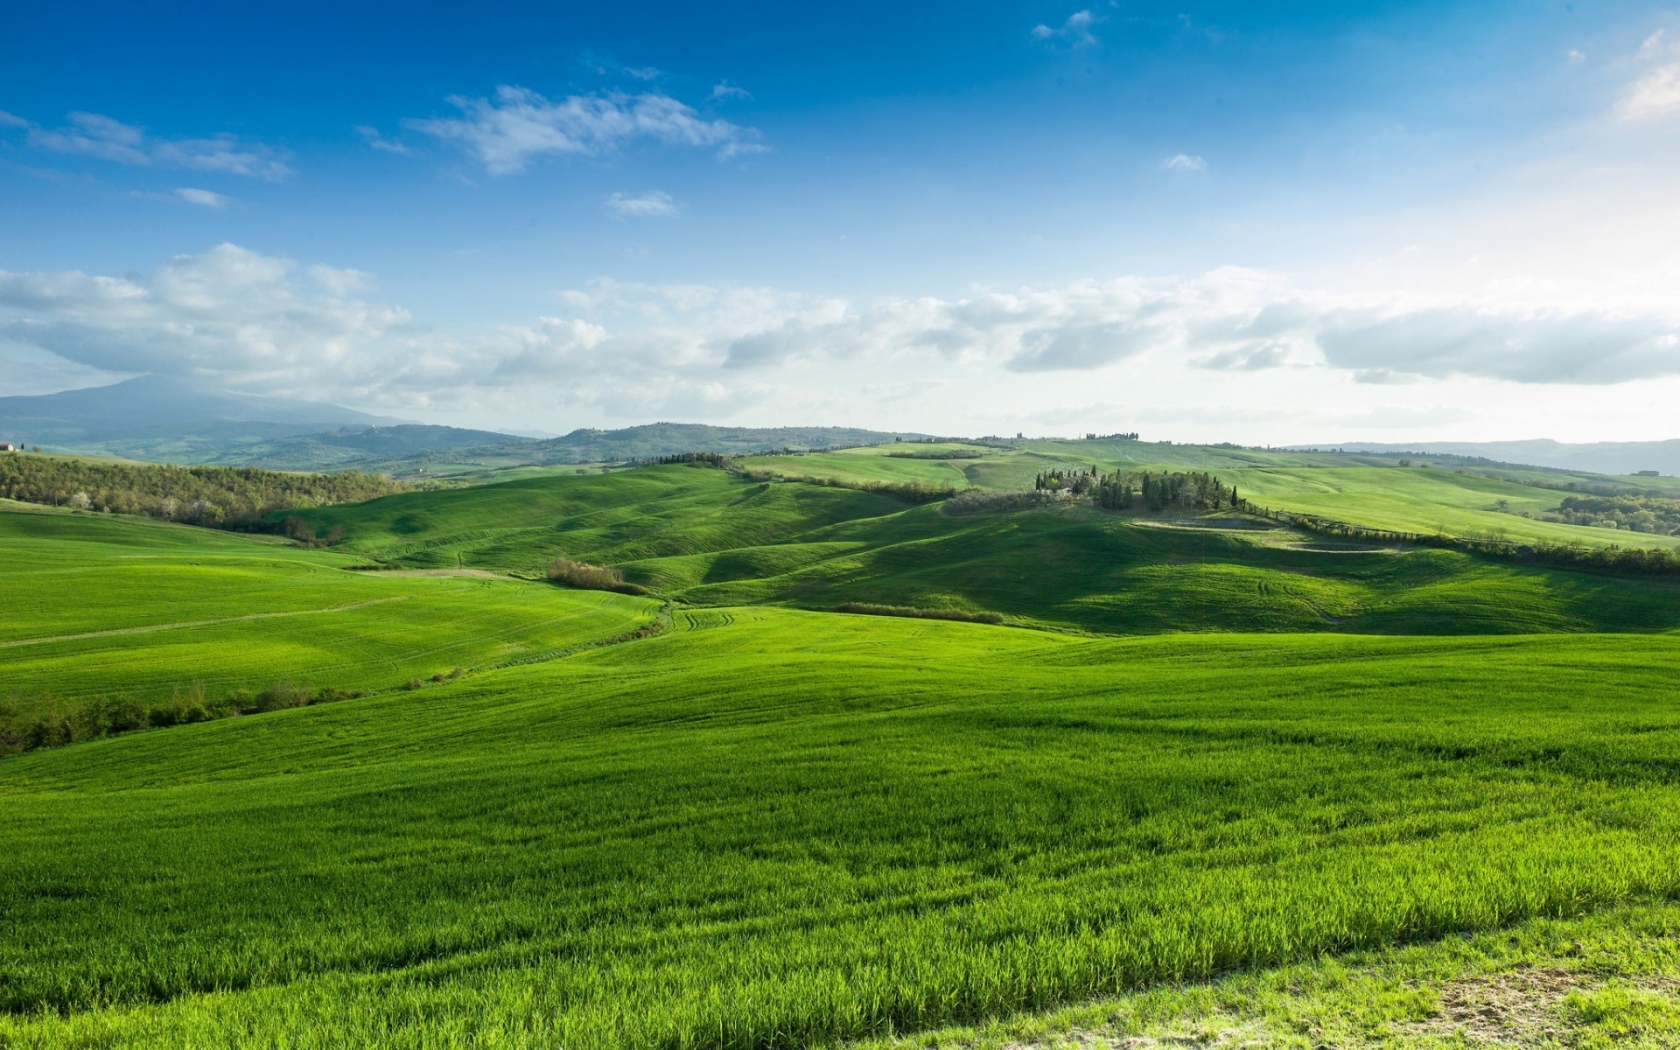 Beautiful Green Lands for 1680 x 1050 widescreen resolution